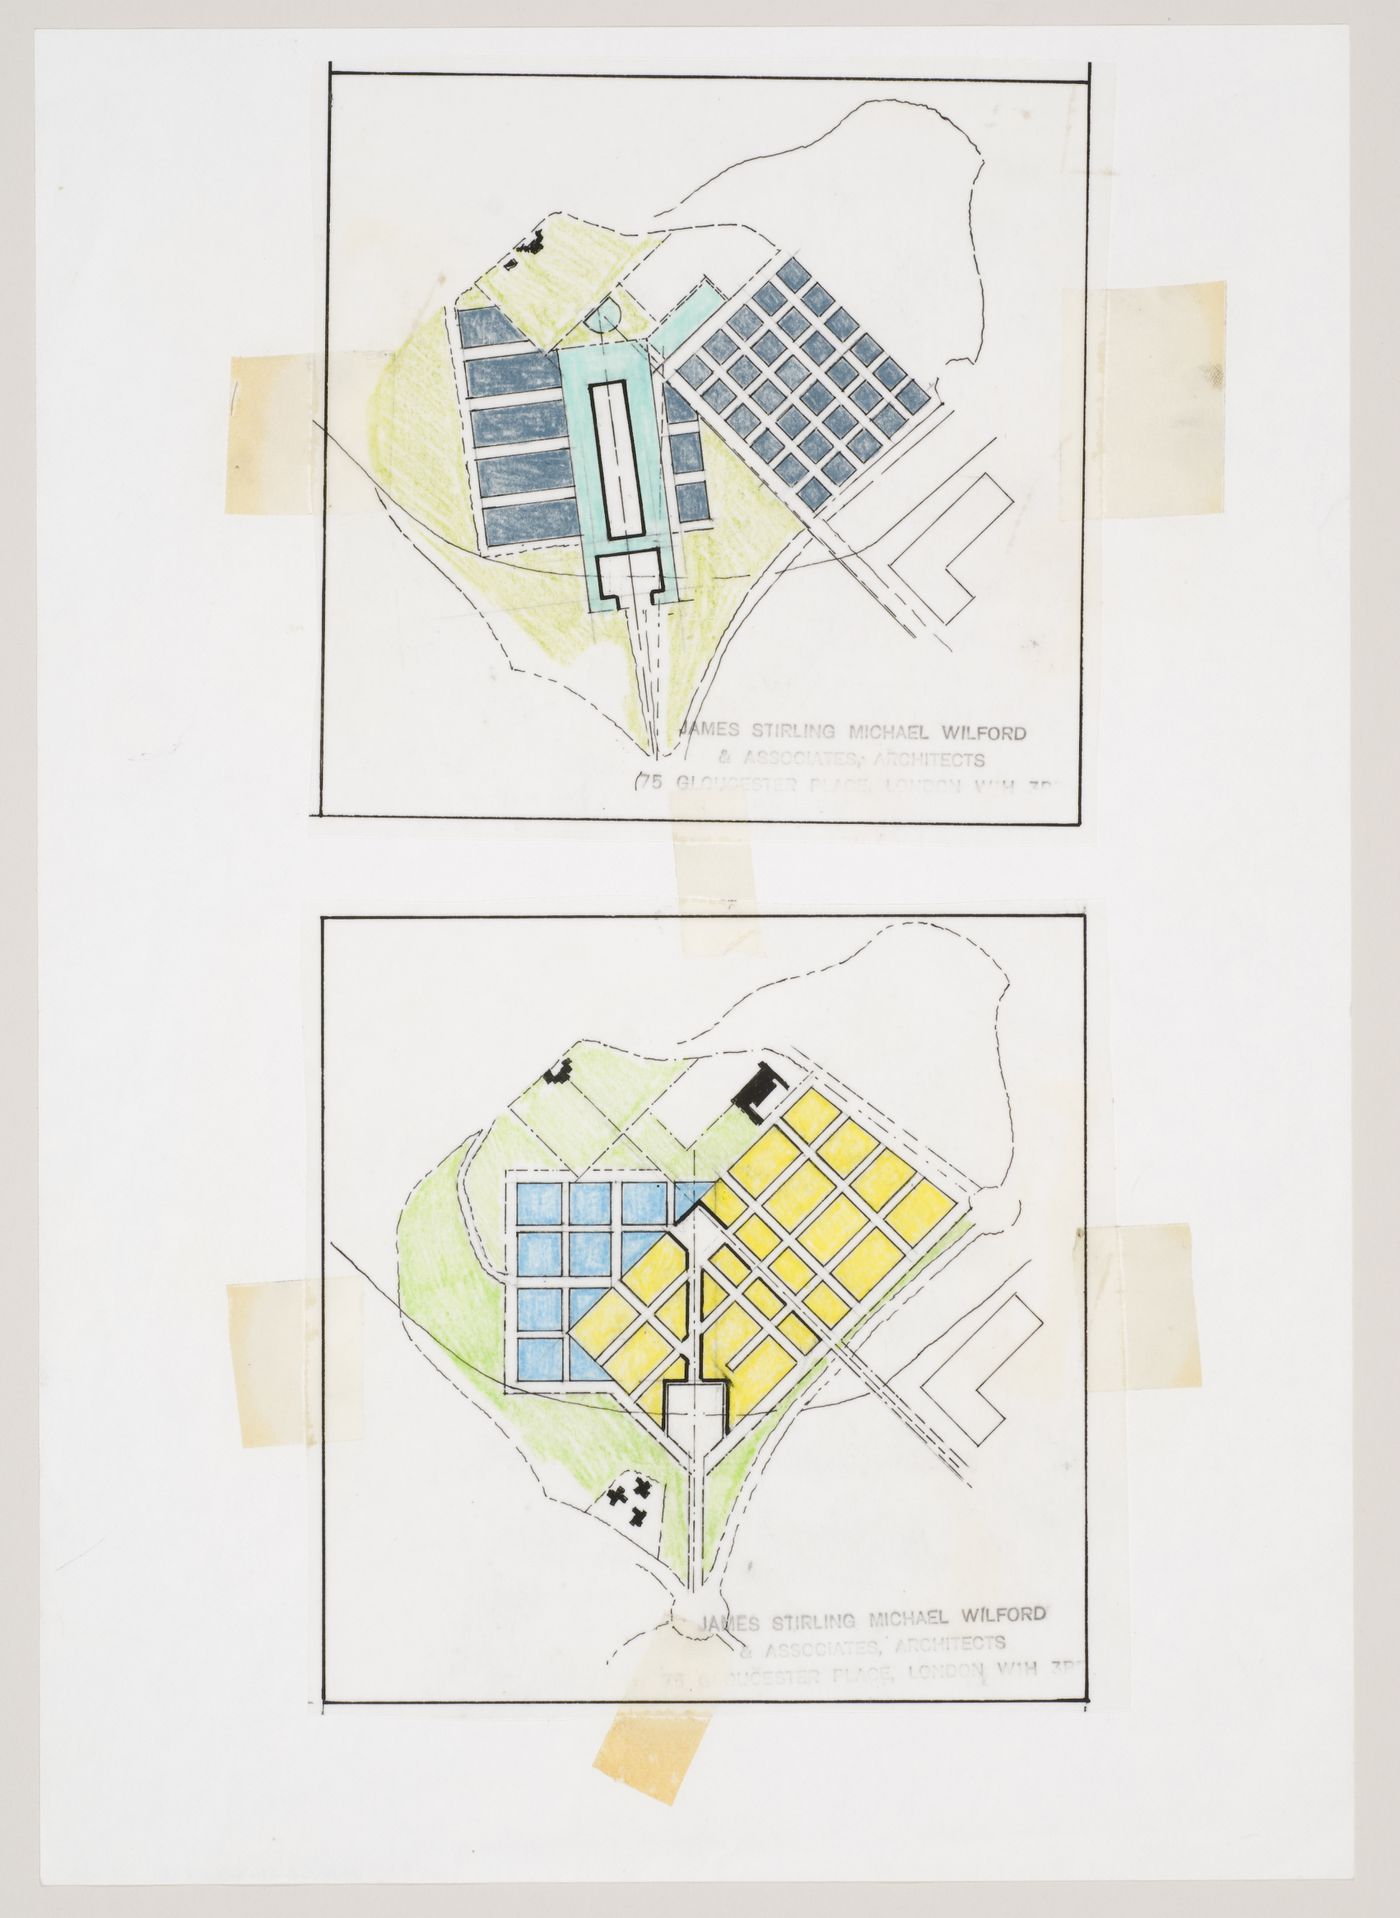 New Town Centre, Caselecchio di Reno, Italy: plans